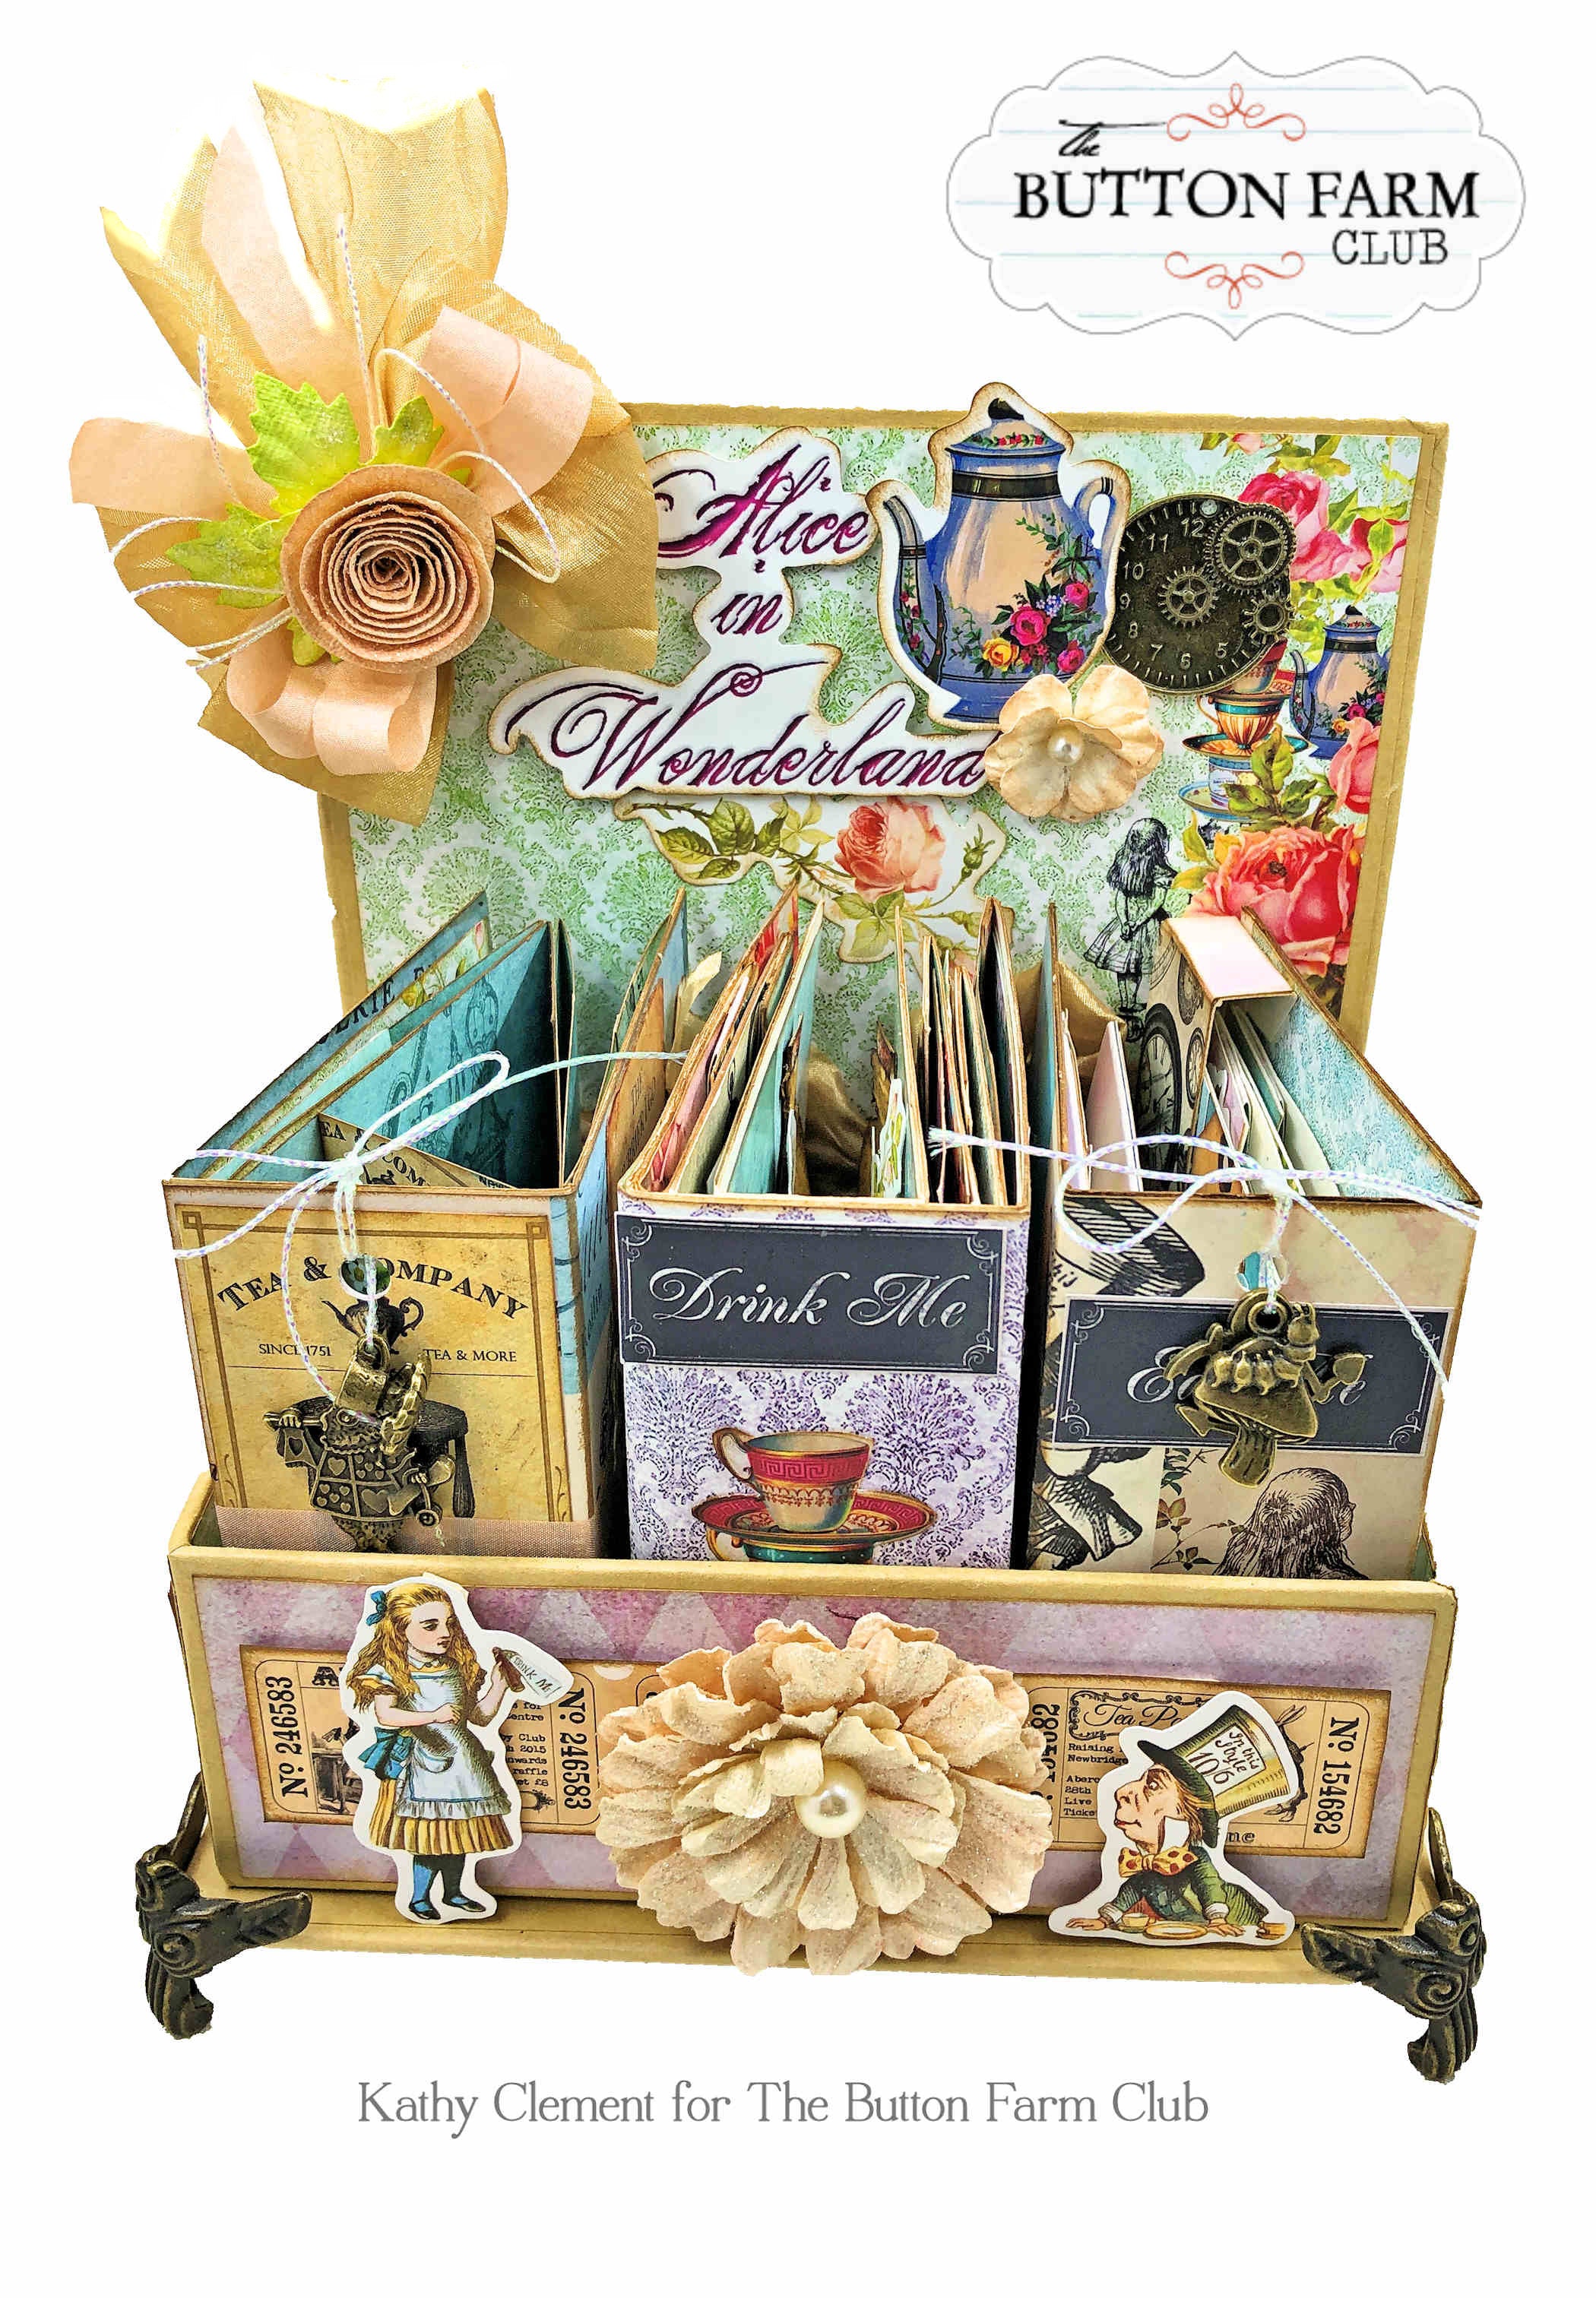 Alice in Wonderland Gifts: Alice in Wonderland Tea Gift Set